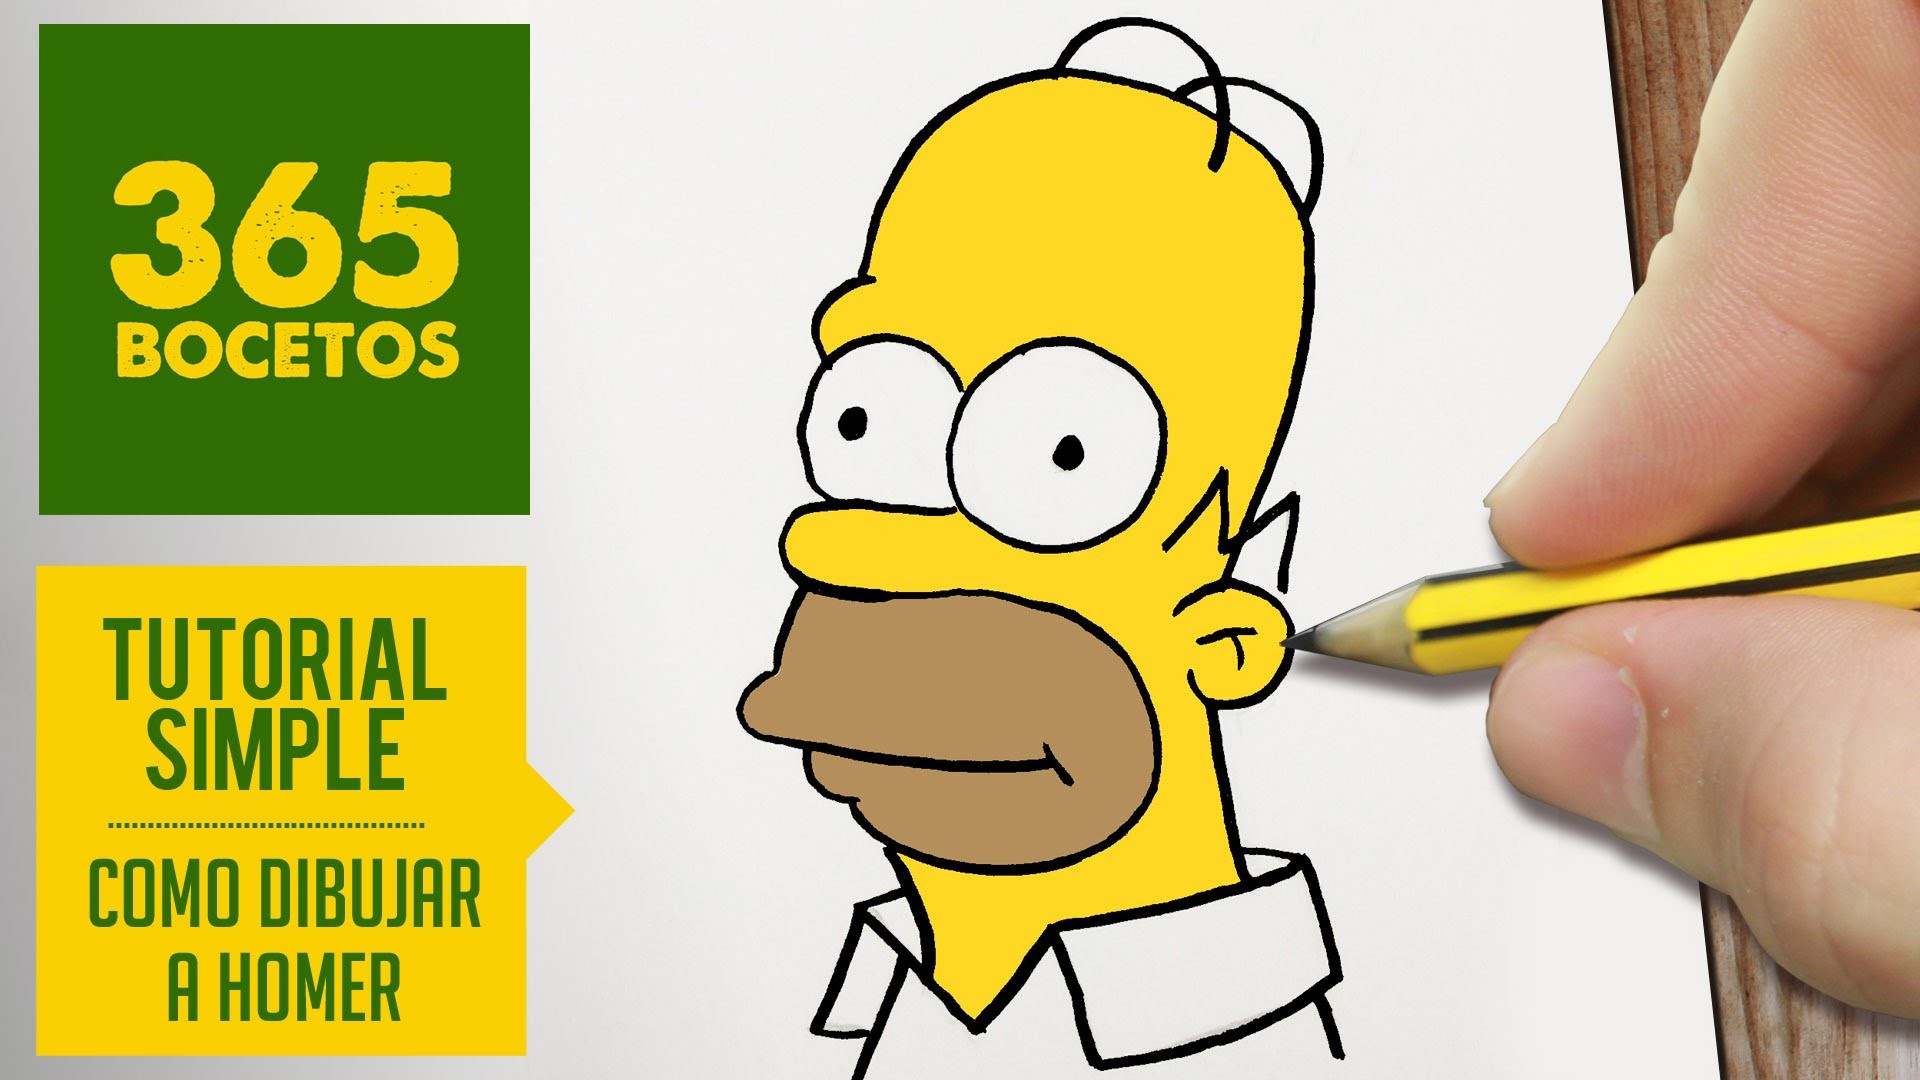 COMO DIBUJAR HOMER SIMPSON. HOMERO PASO A PASO - Los Simpsons - How to draw a Homer Simpson